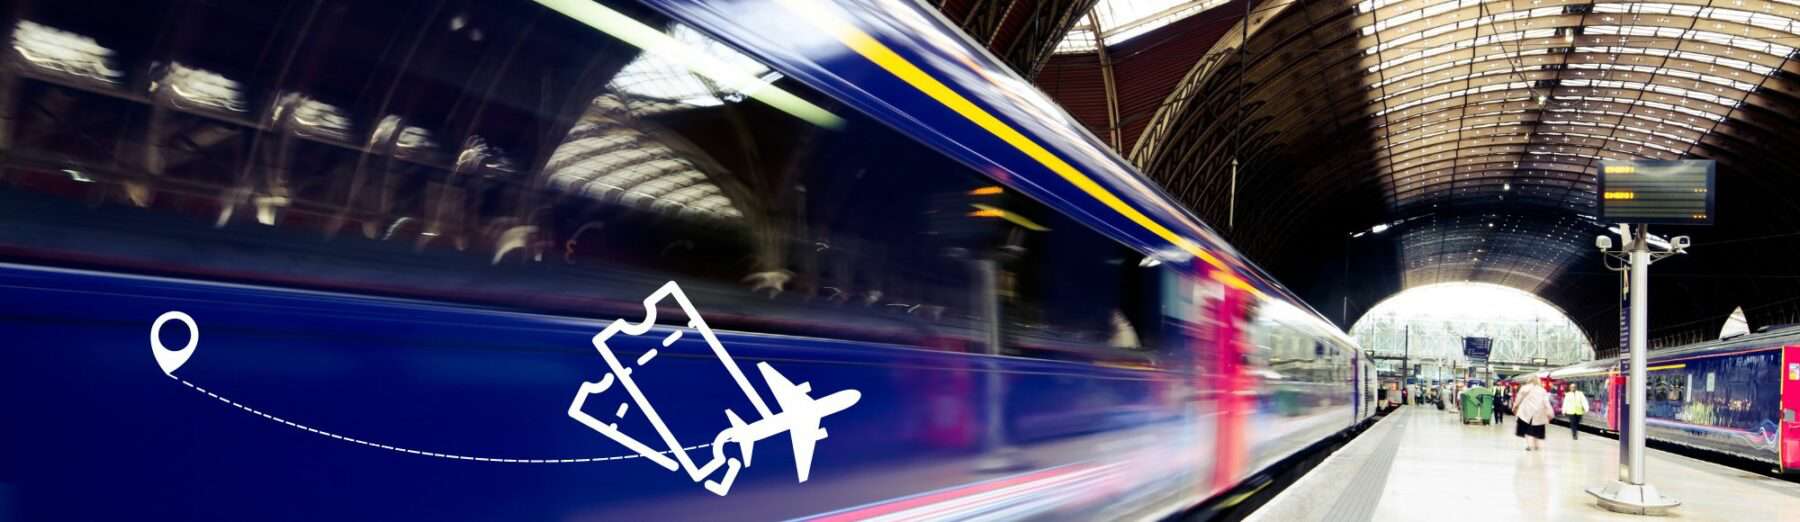 Heathrow Express to Paddington | Tickets and Times Explained